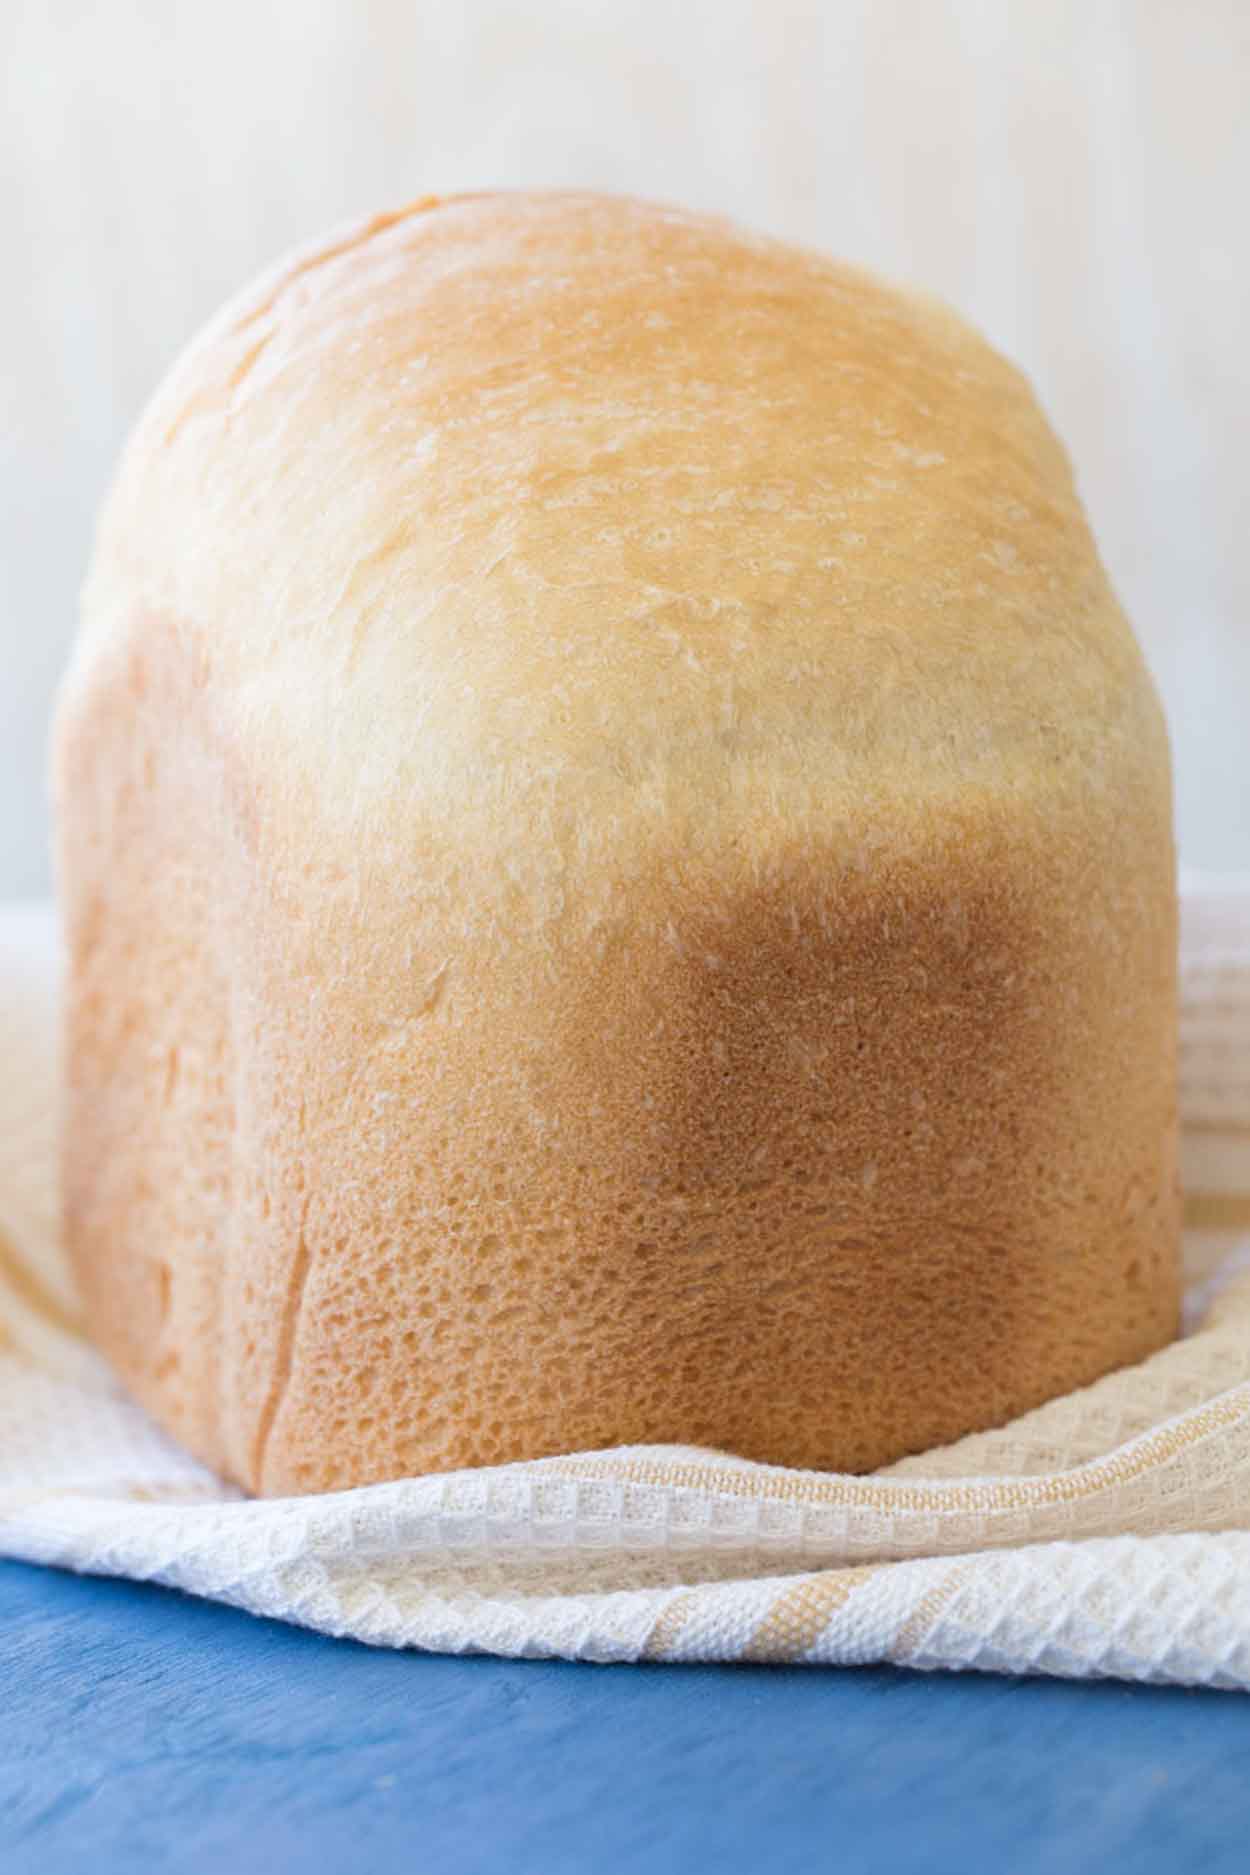 https://valentinascorner.com/wp-content/uploads/2016/10/Best-Bread-Machine-Bread-Recipe-5.jpg